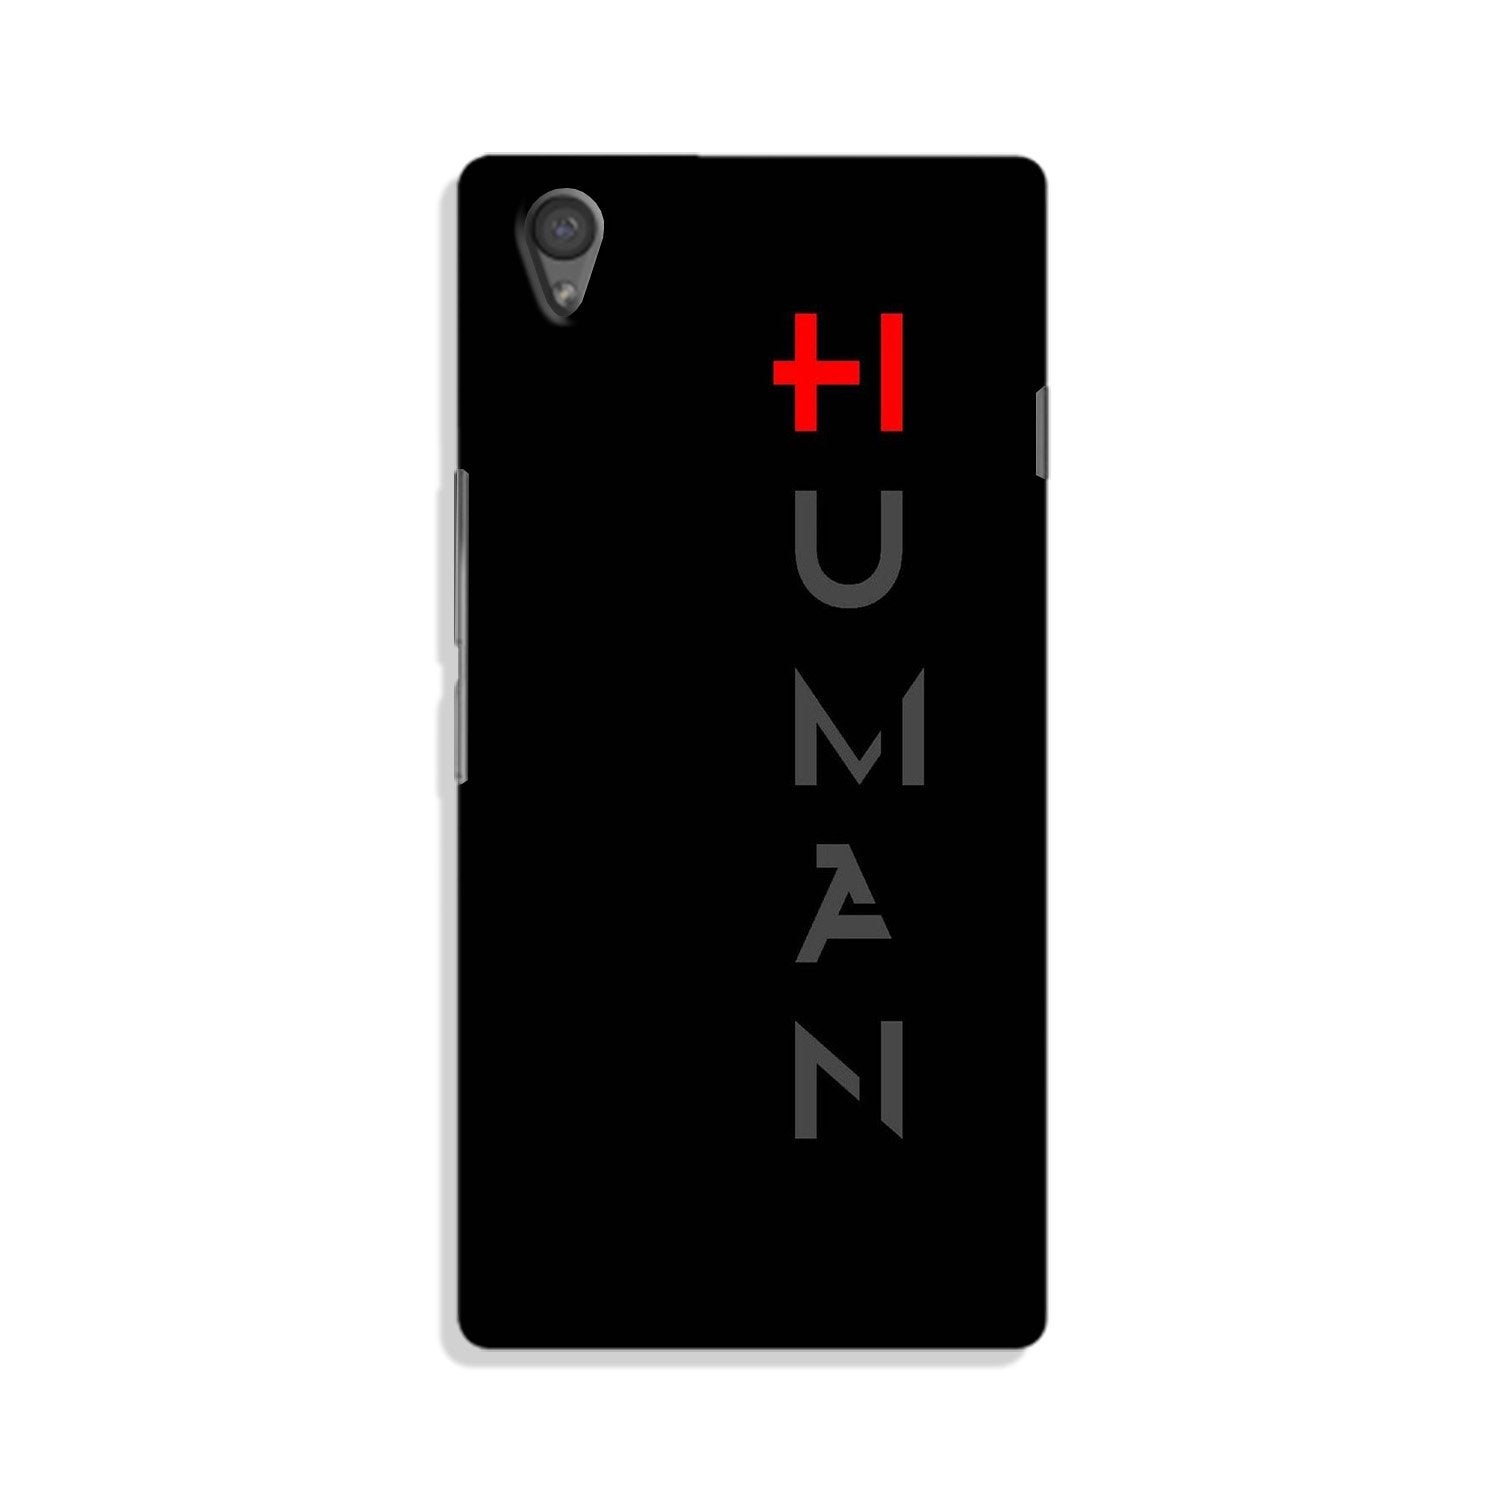 Human Case for Vivo Y51L(Design - 141)